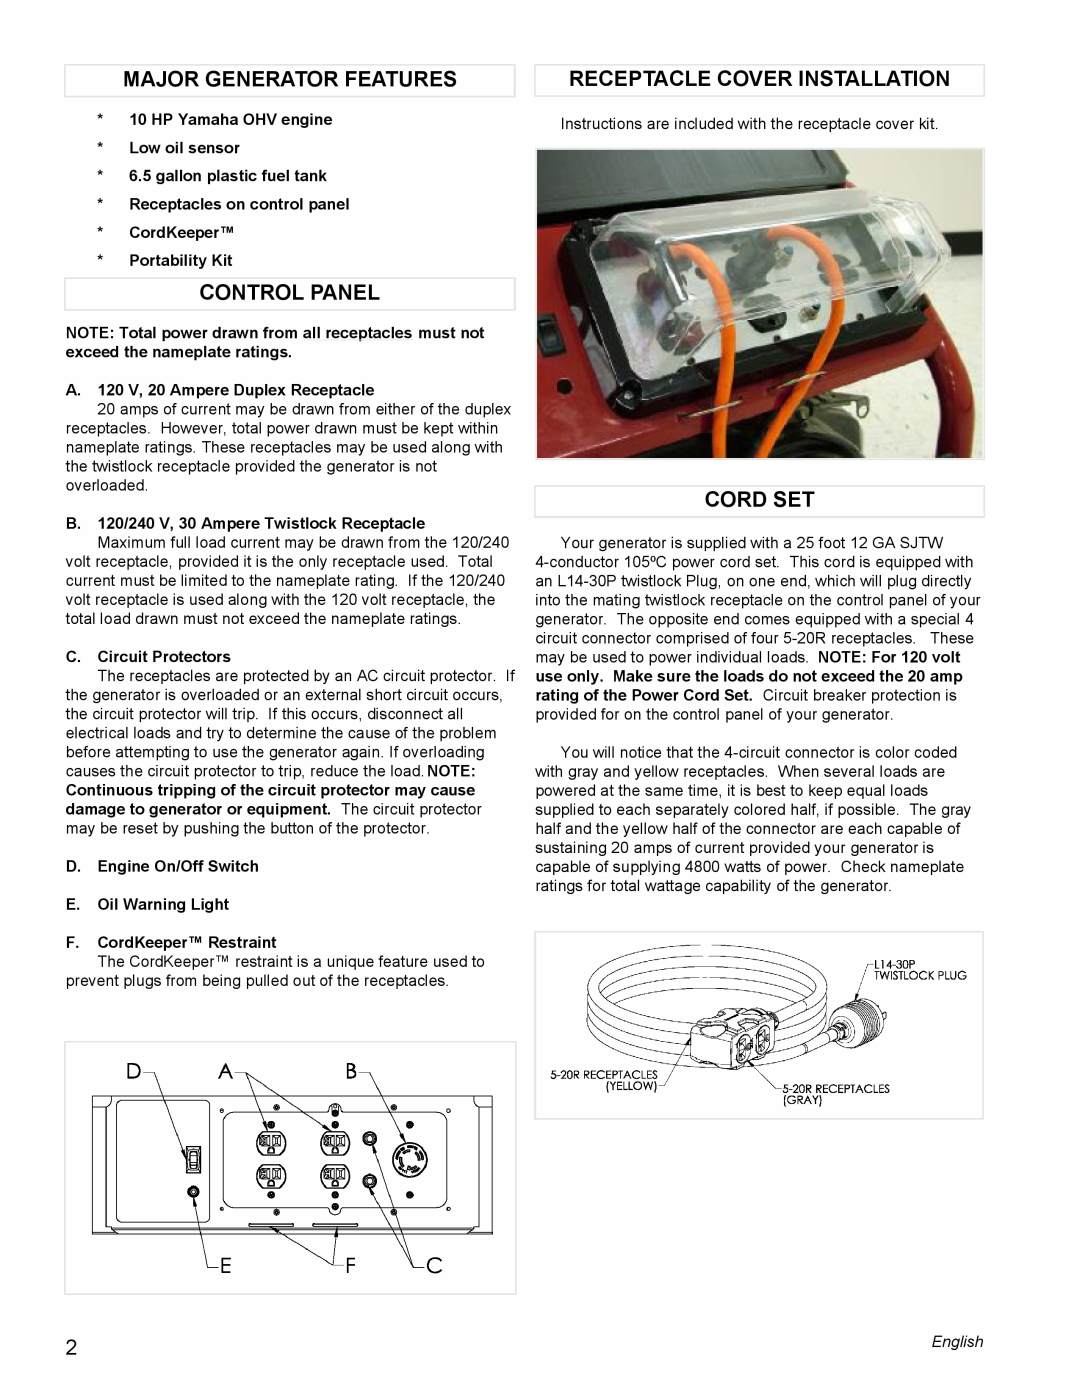 Powermate PM0675700 manual Major Generator Features, Receptacle Cover Installation, Control Panel, Cord Set 